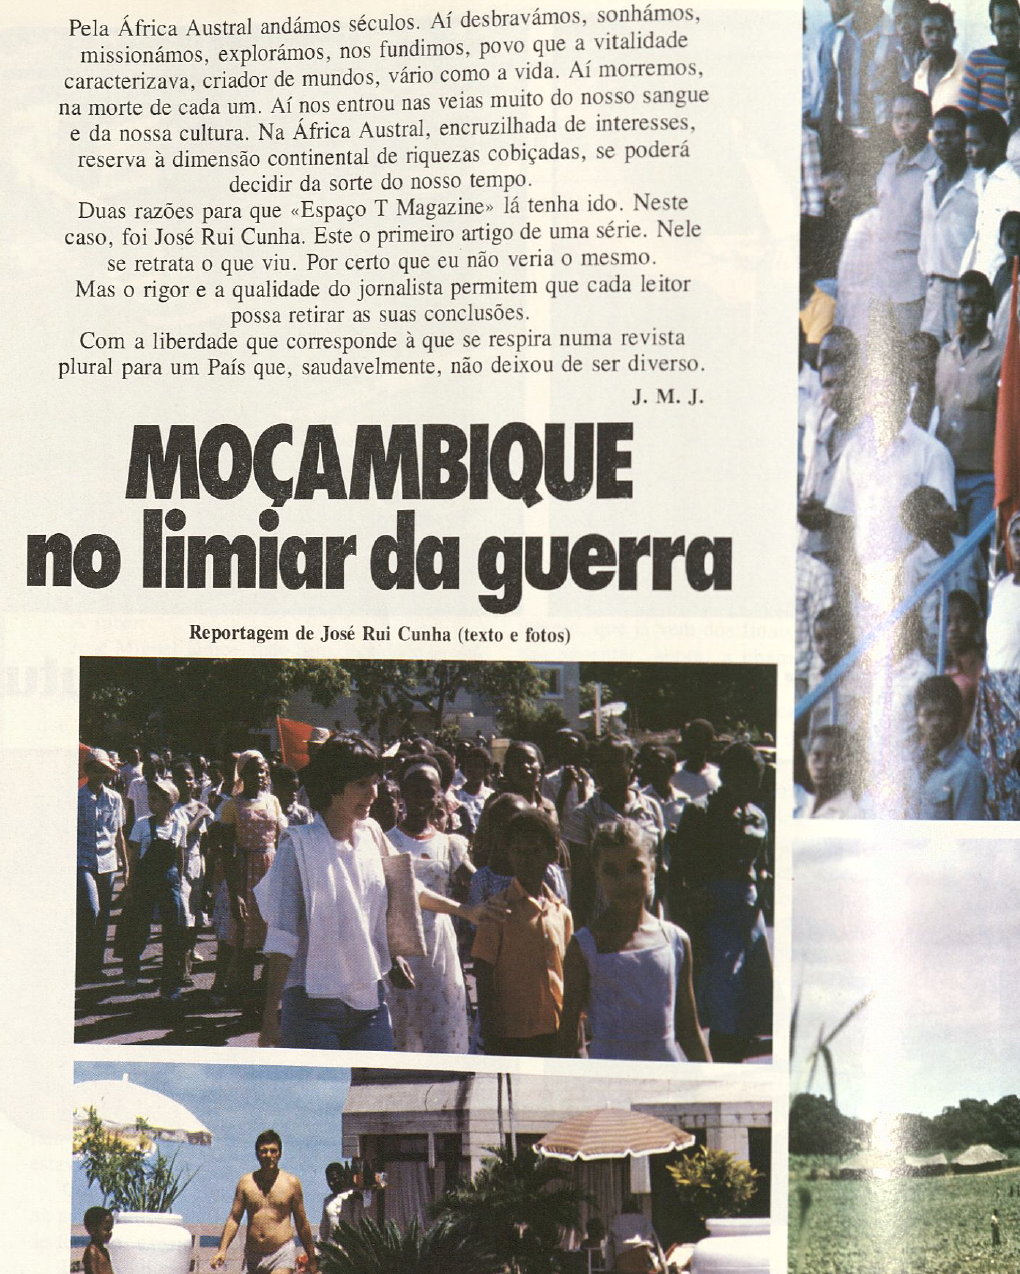 "Moçambique no limiar da guerra"